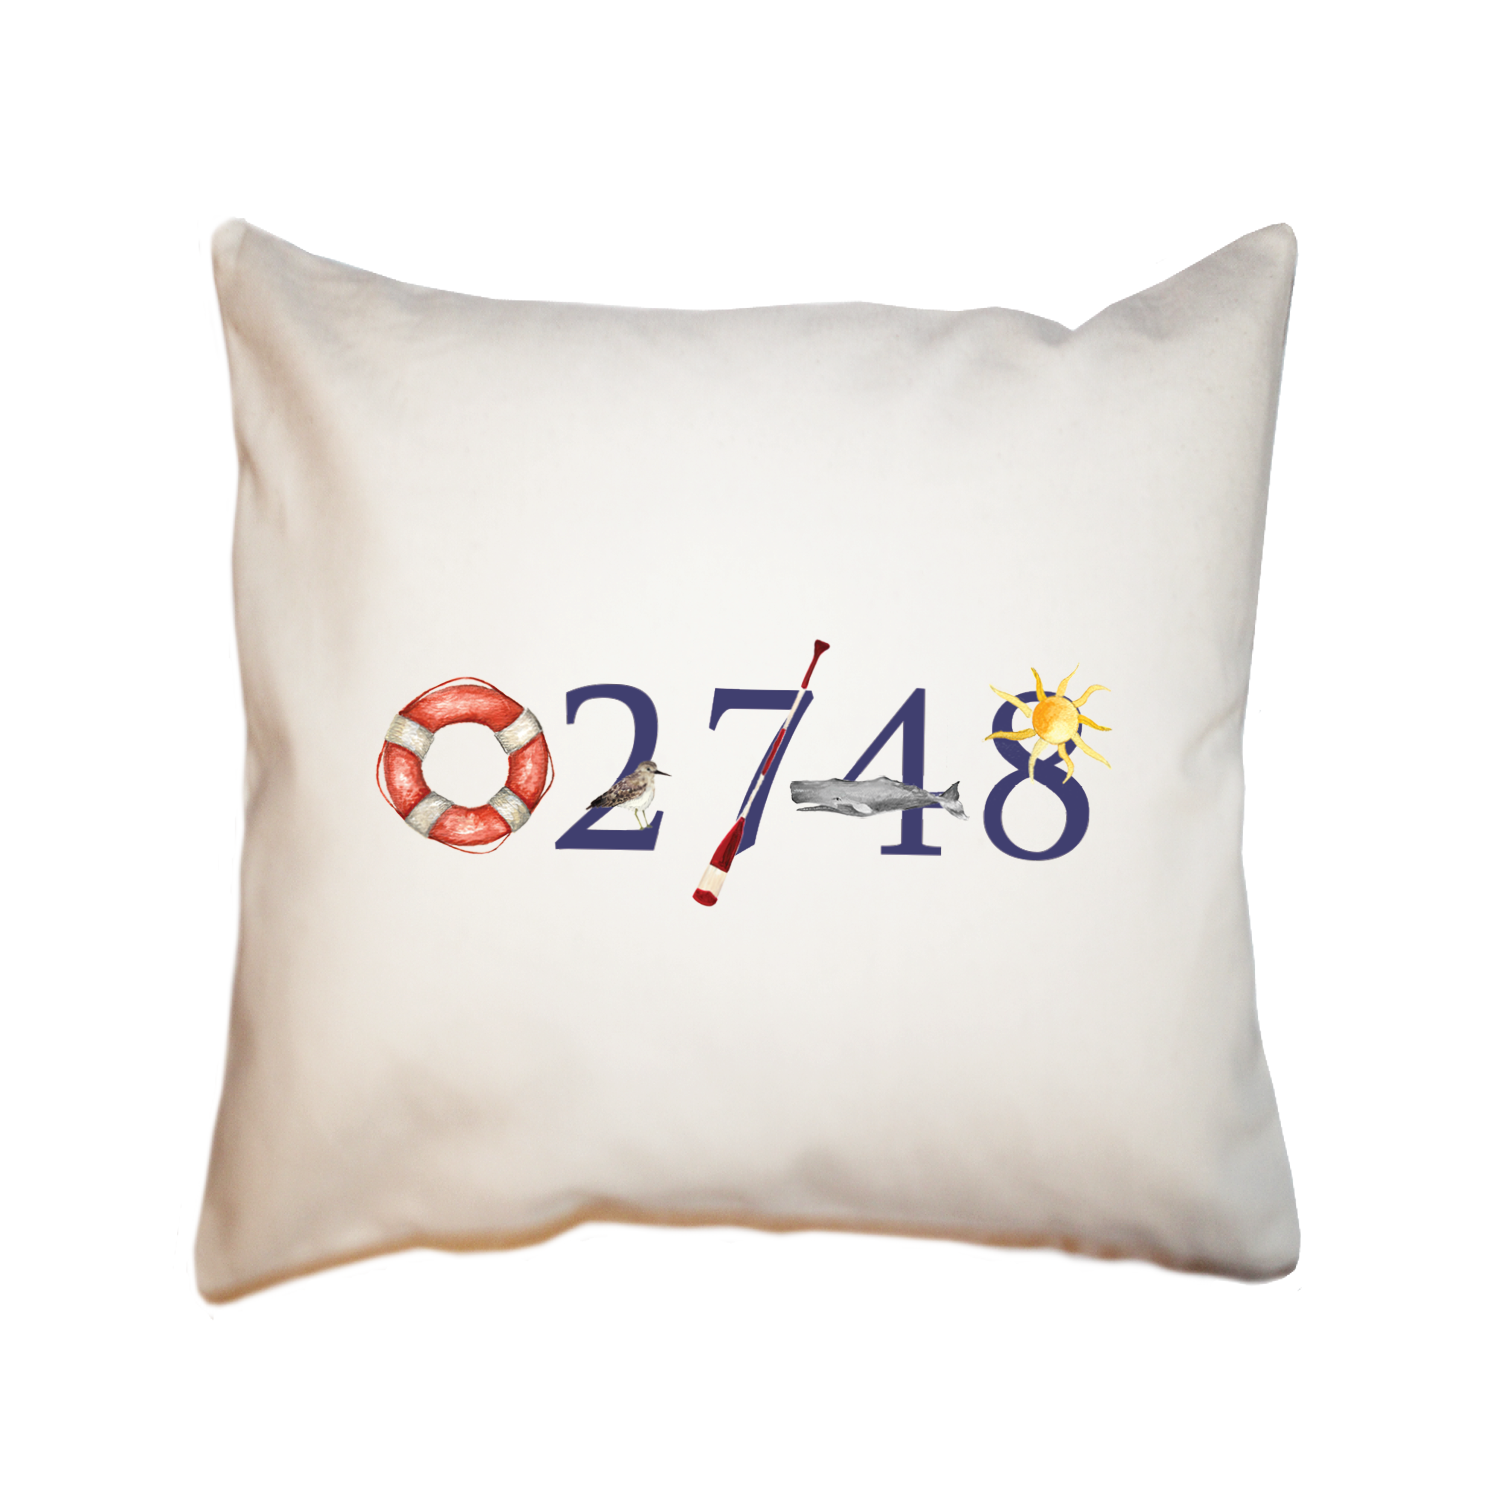 02748 dartmouth zip code square pillow